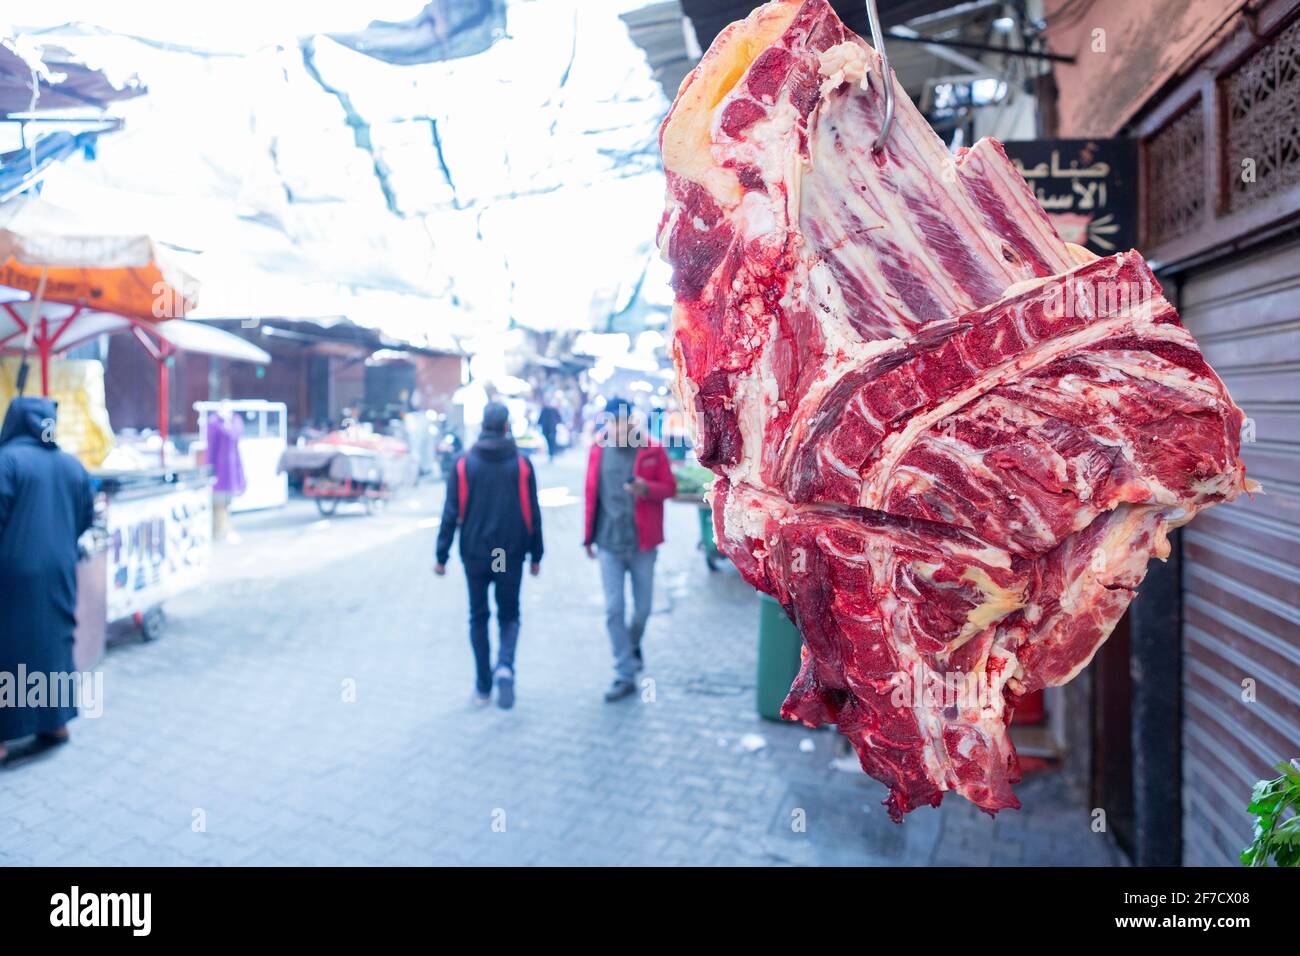 Fresh Meat Hang on Spike in Asain Market. Stock Photo - Image of loin,  roast: 67932000